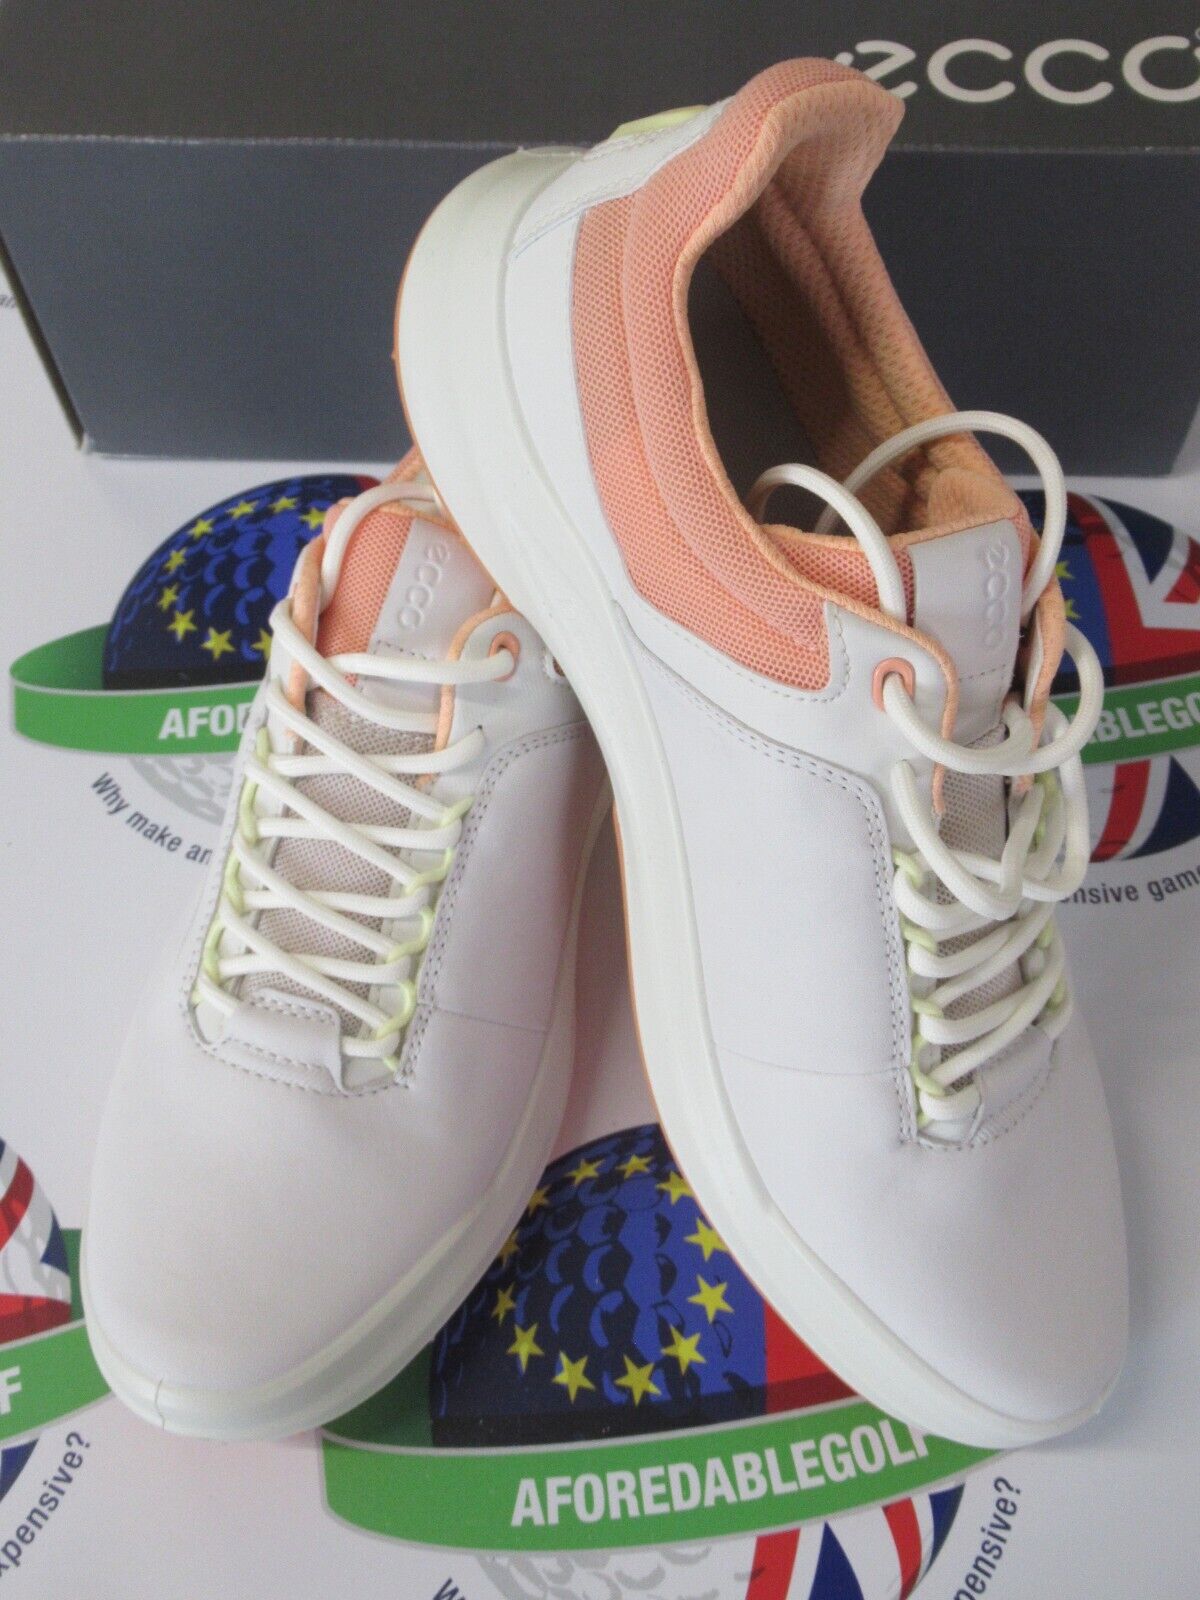 ecco womens golf core golf shoes white/peach nectar uk size 6.5-7